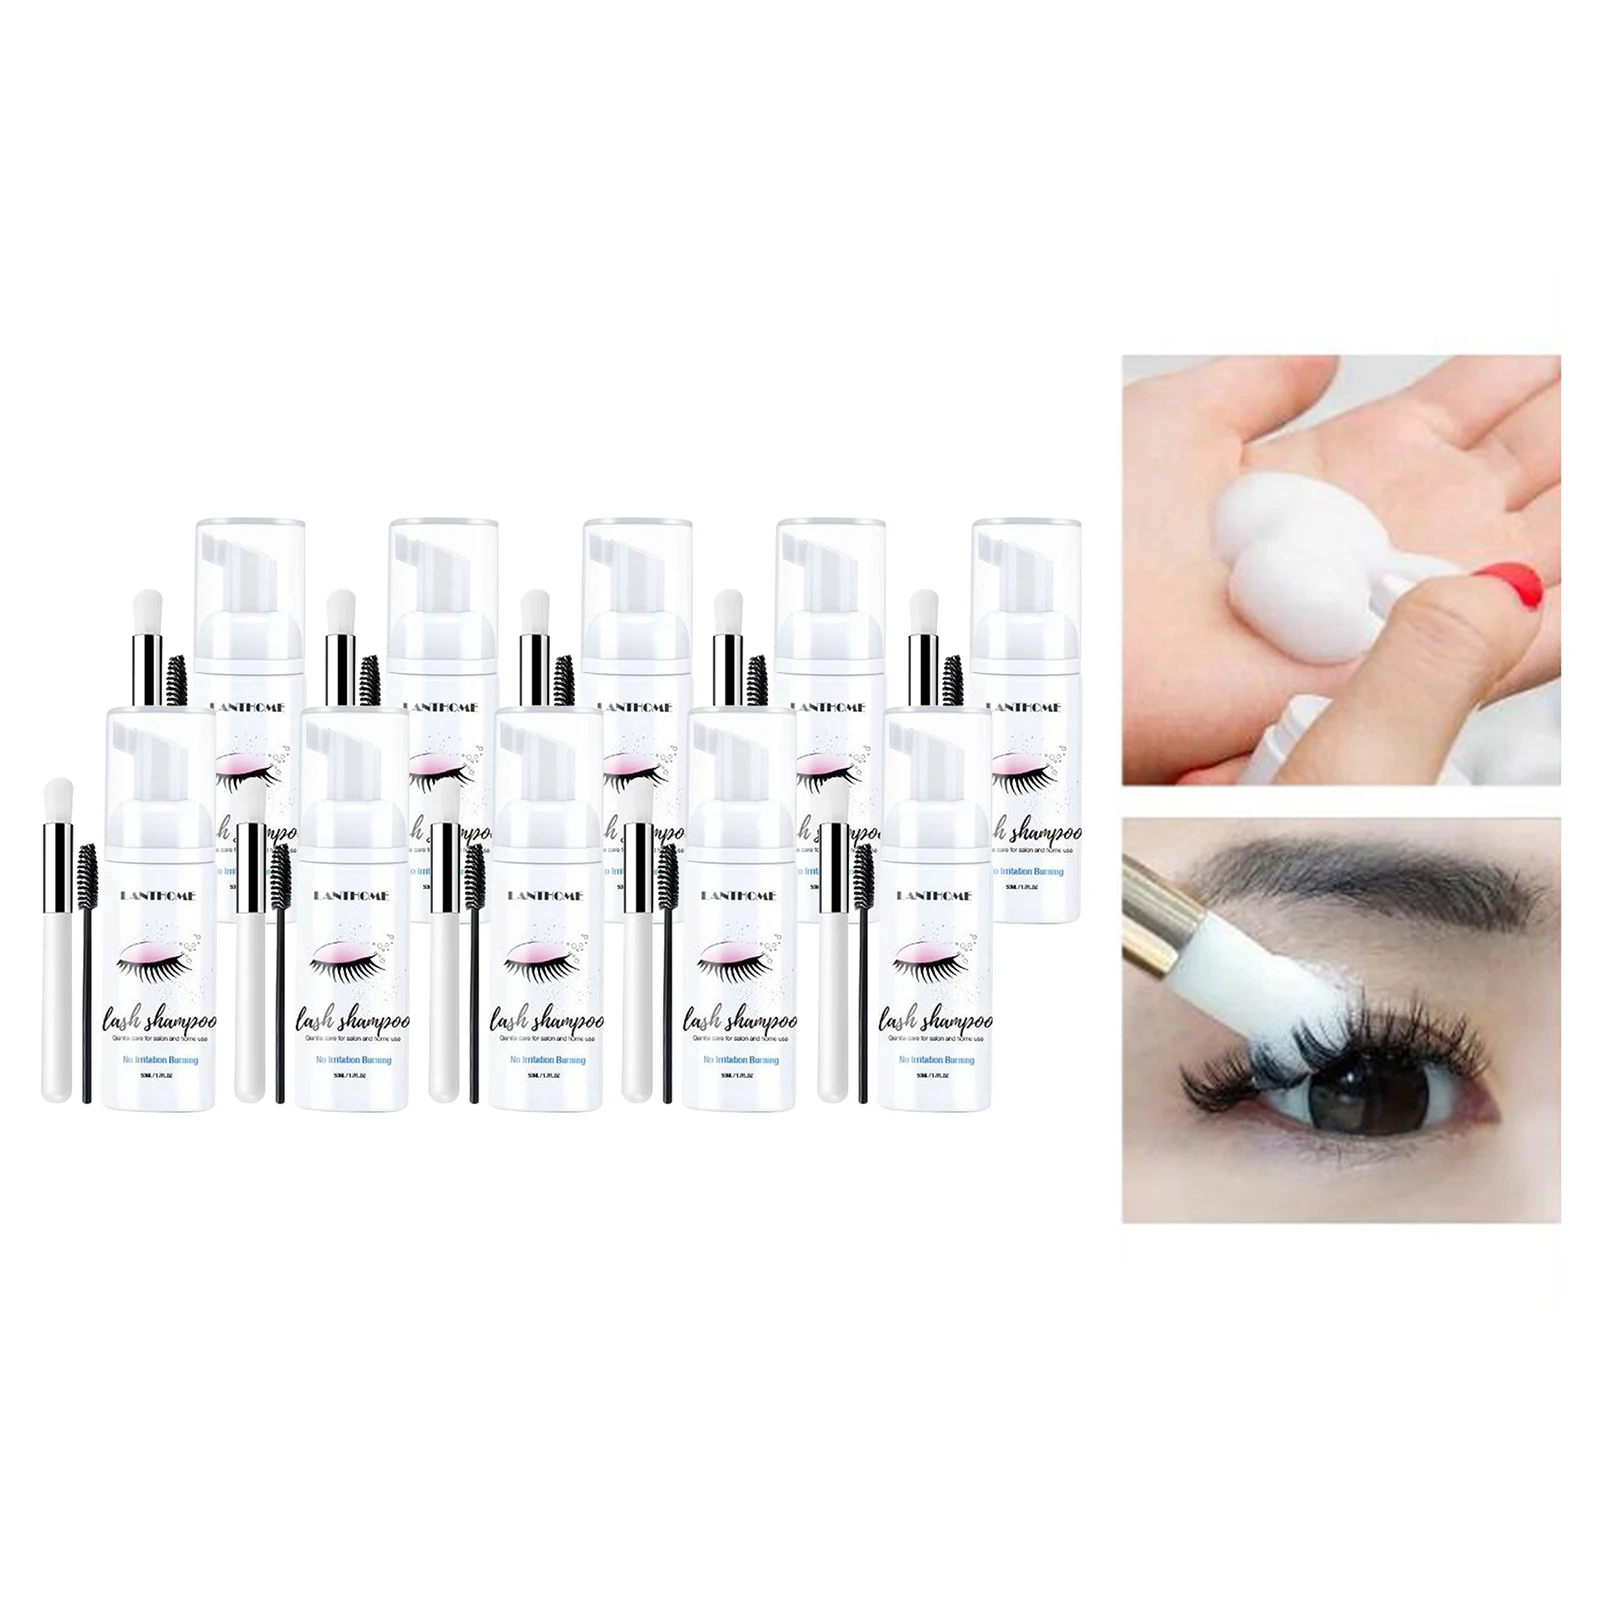 10Set Makeup Eyelash Extensions Brush Shampoo Kit Makeup Remover 50ml Eye Lash Shampoo Cleaning Eyelashes Mousse Foam Cleaner